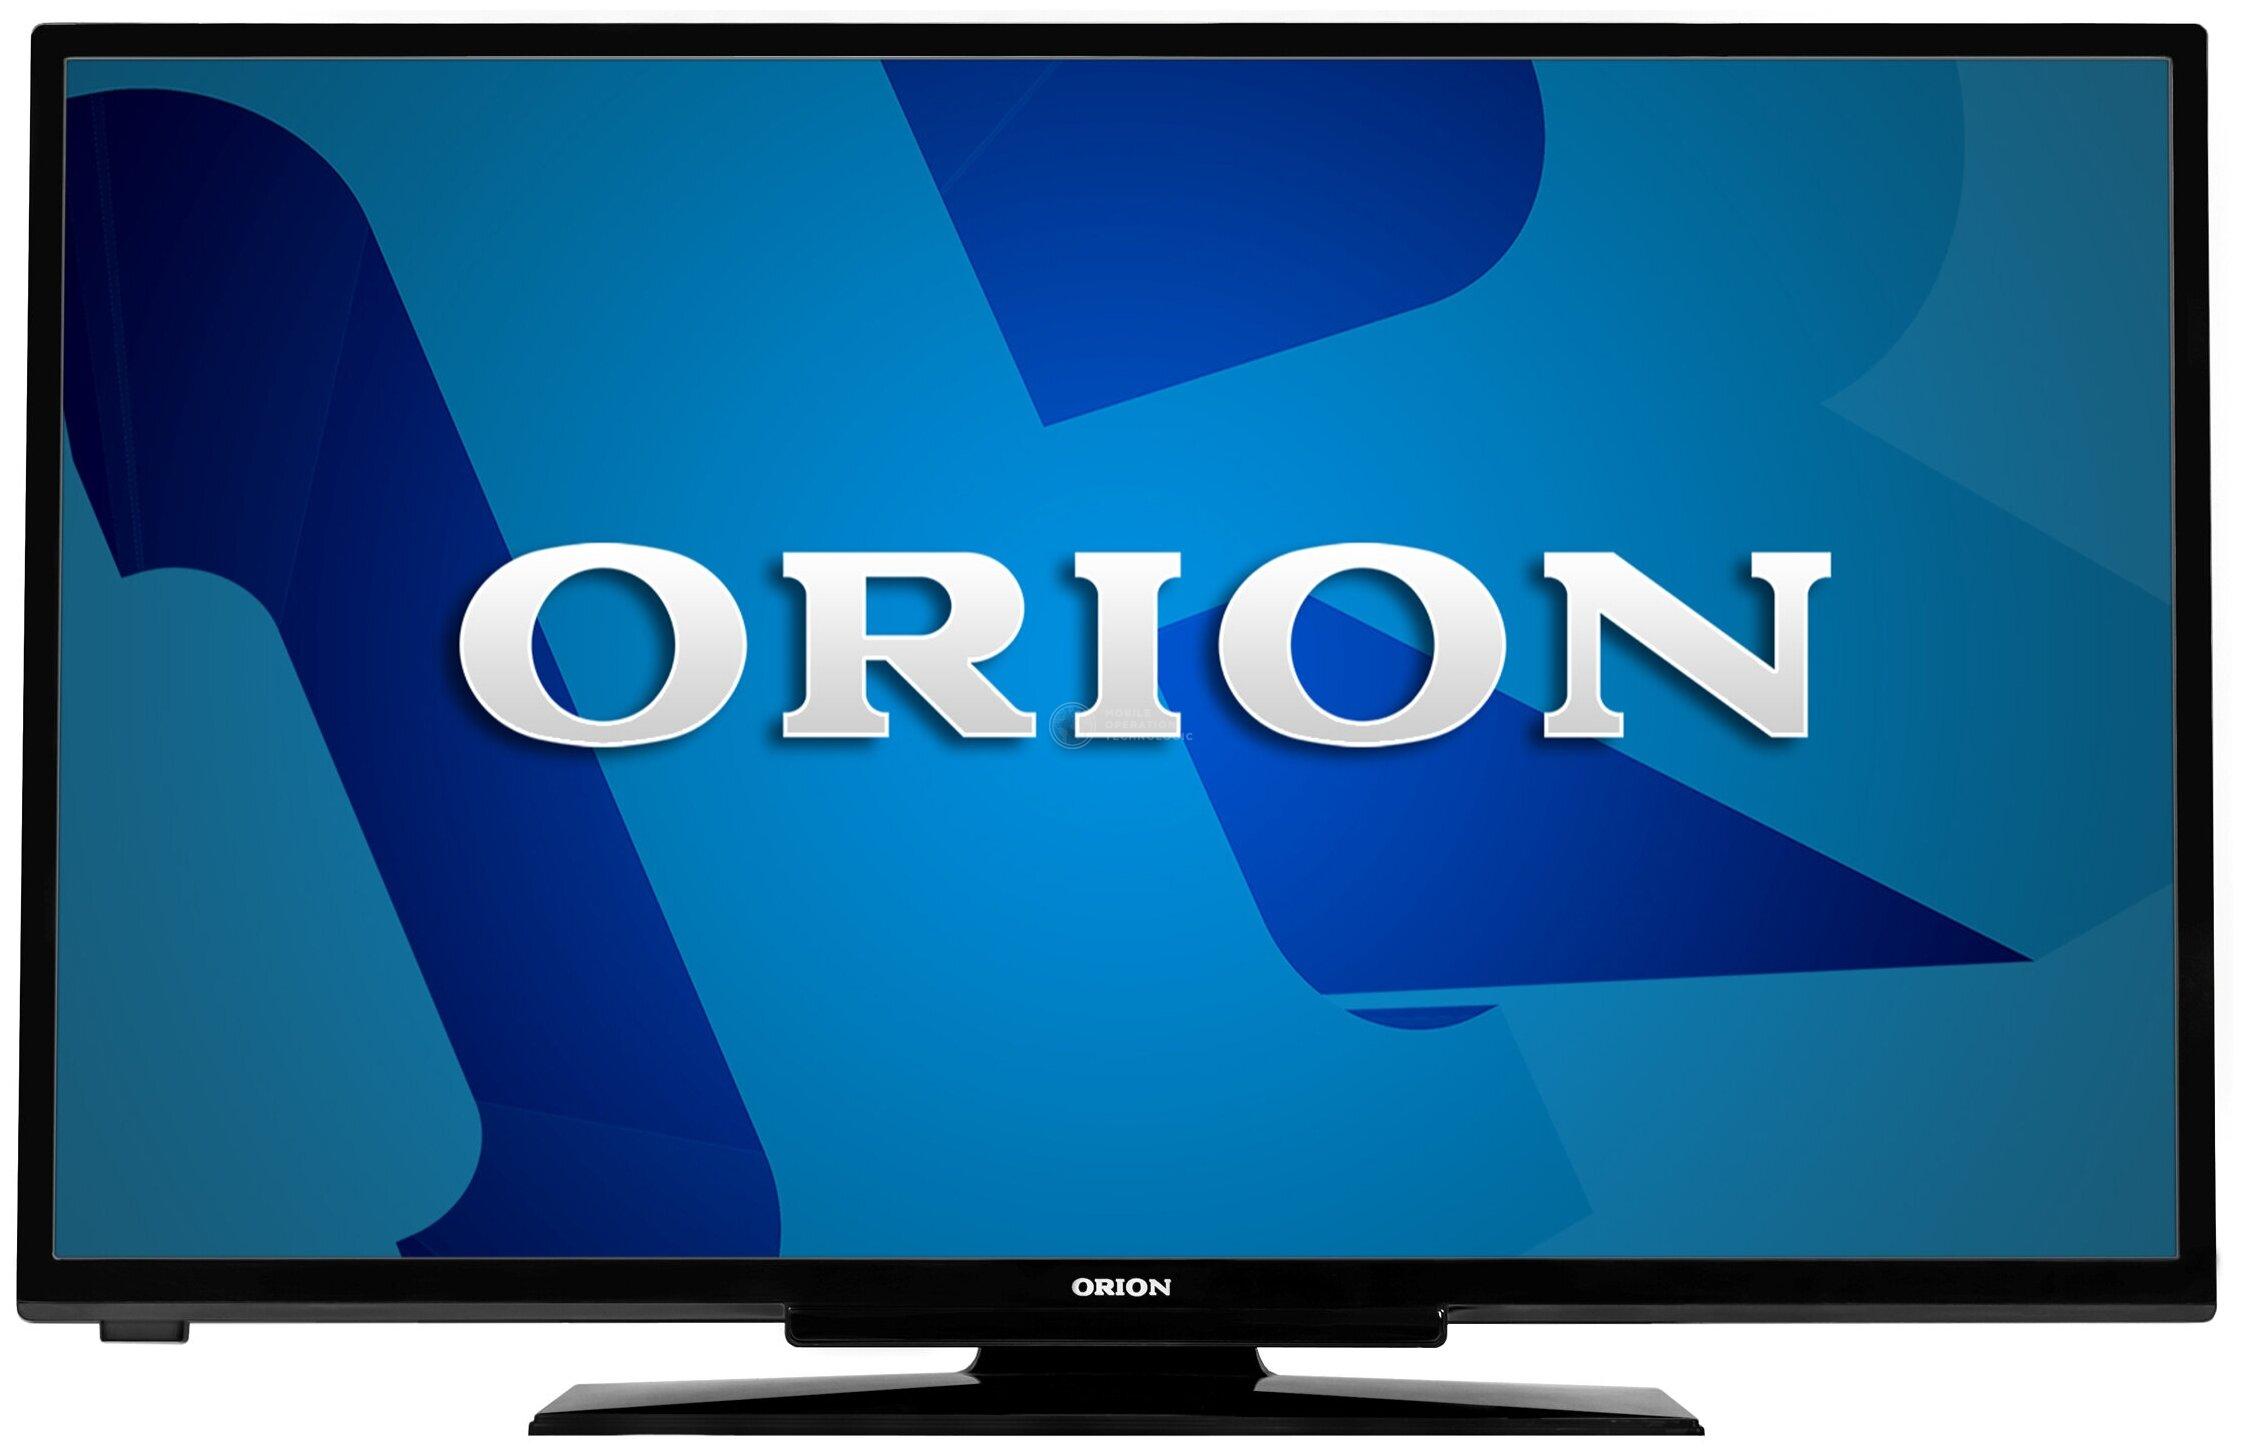 Orion TV40FBT3000D